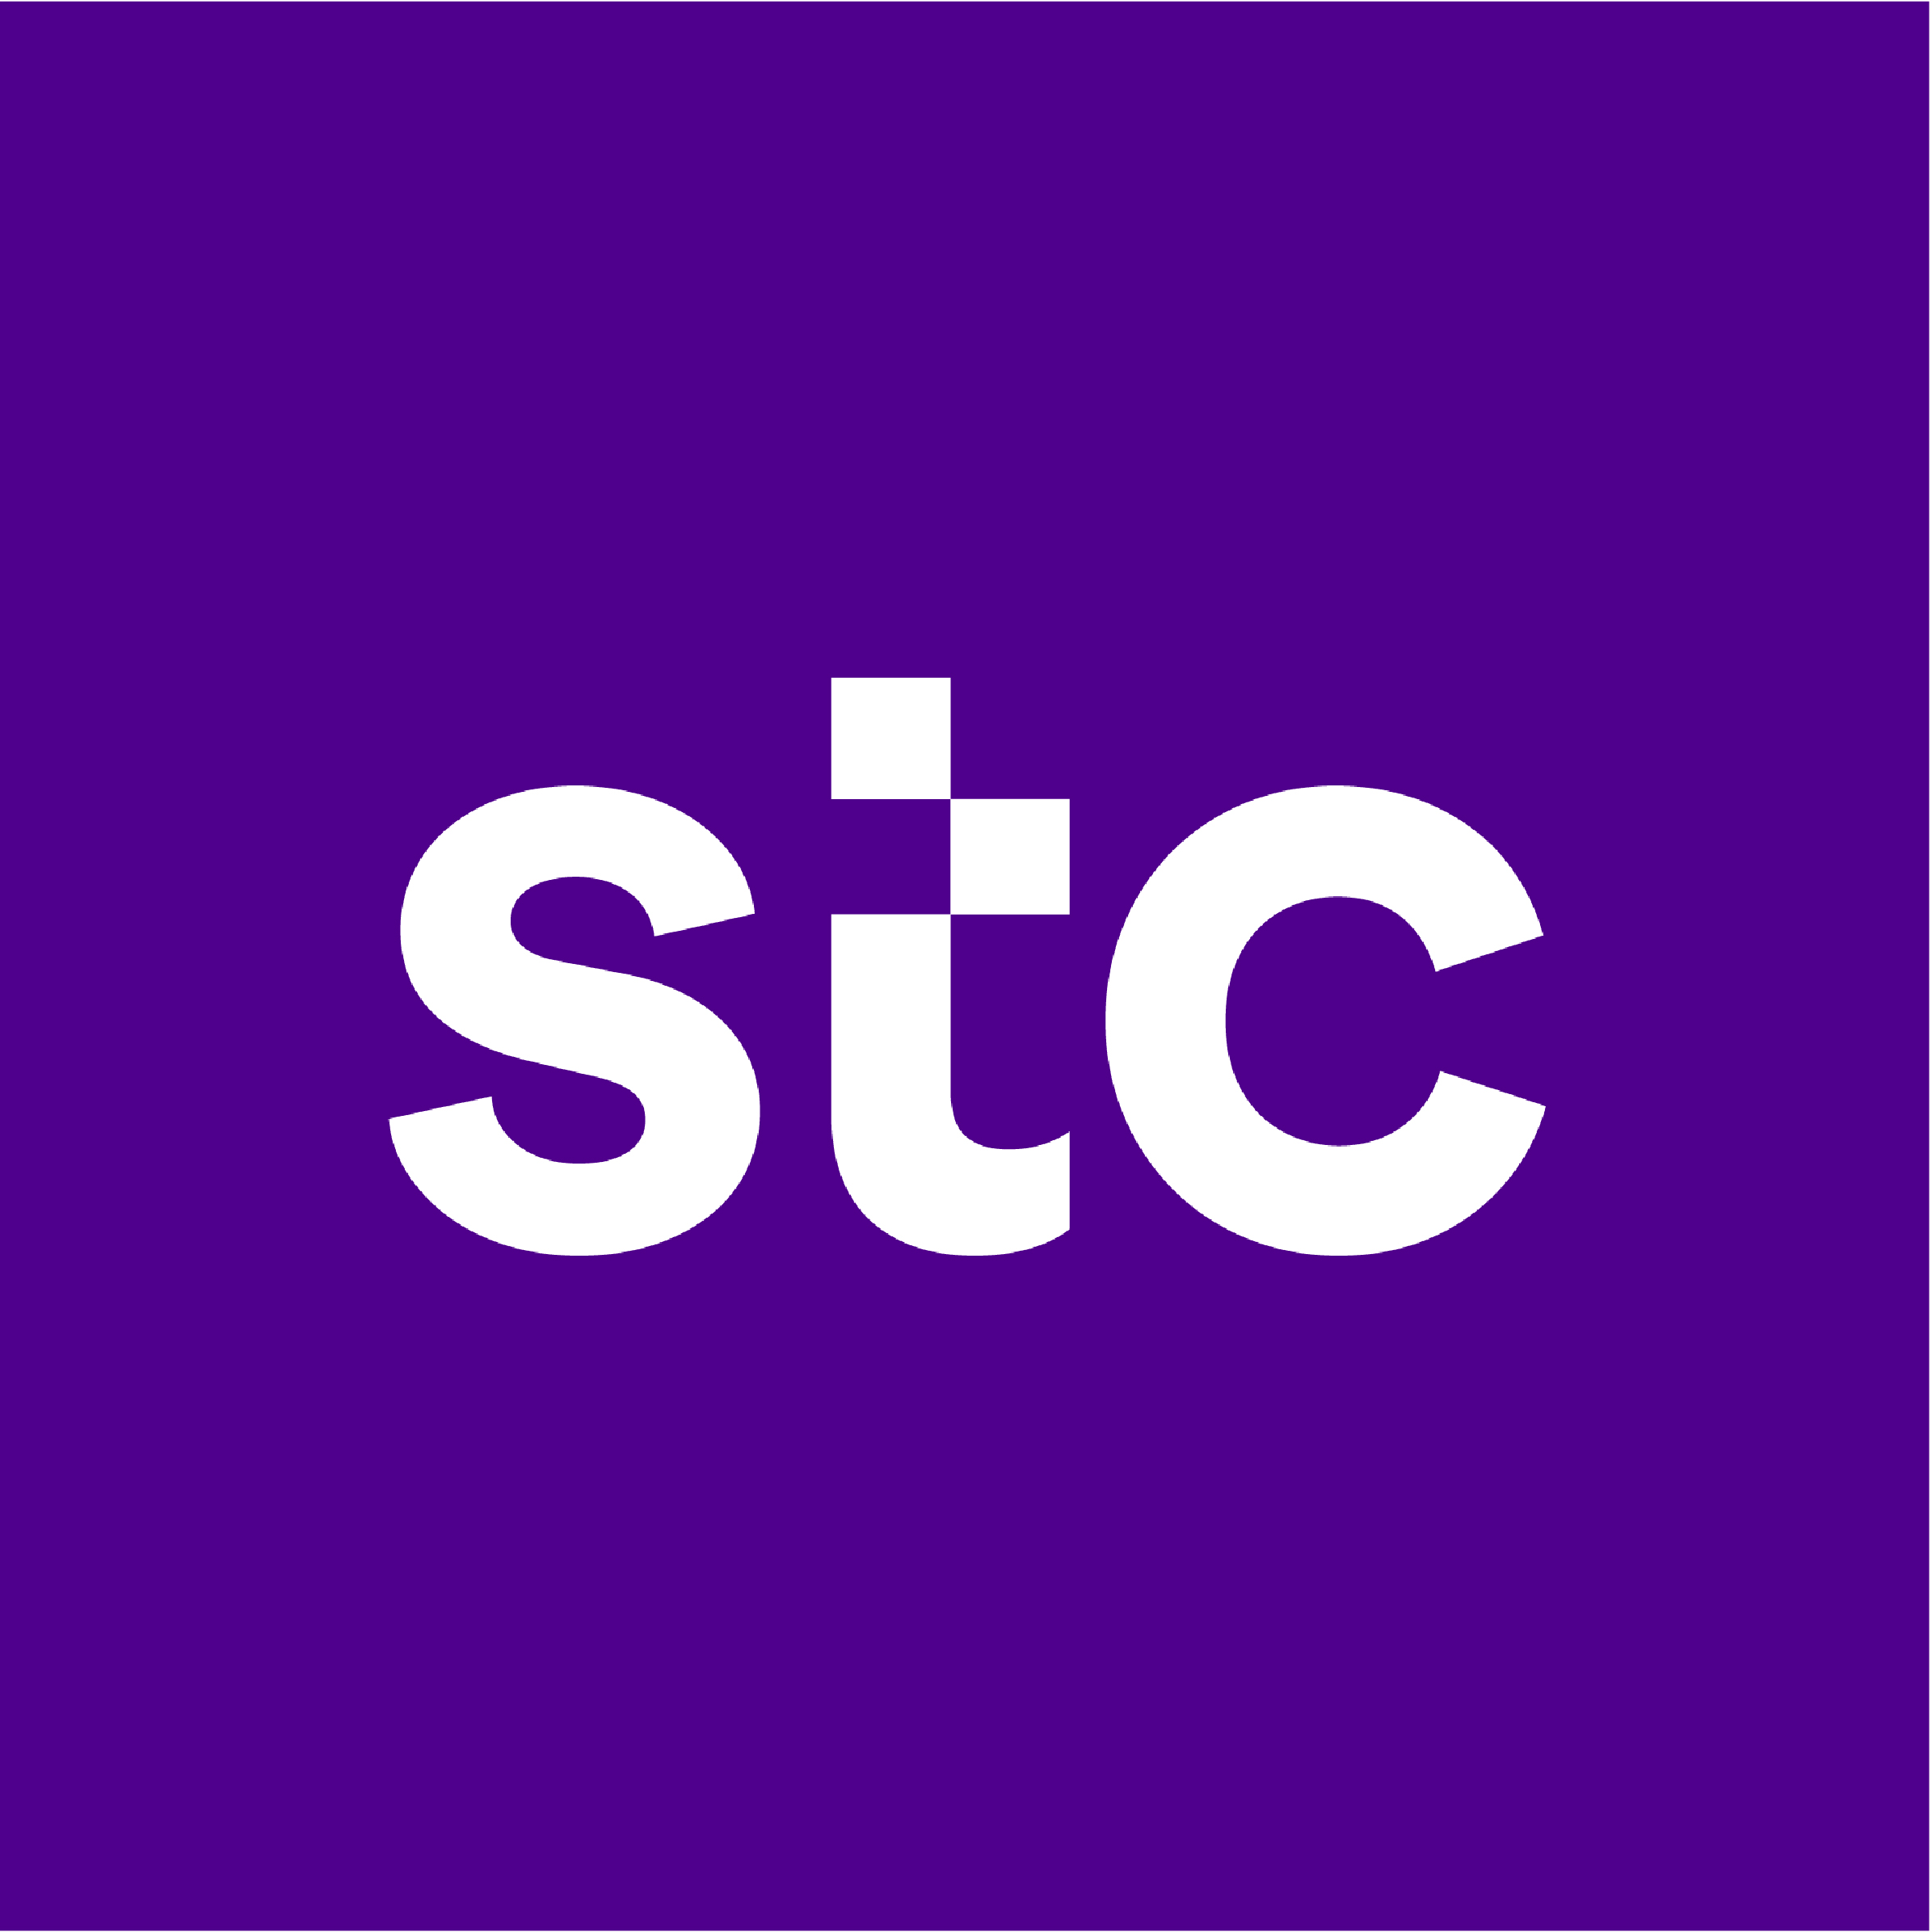 Stc group. STC logo. C.A.T.S логотип. Saudi Telecom Company. STC+AQAP.